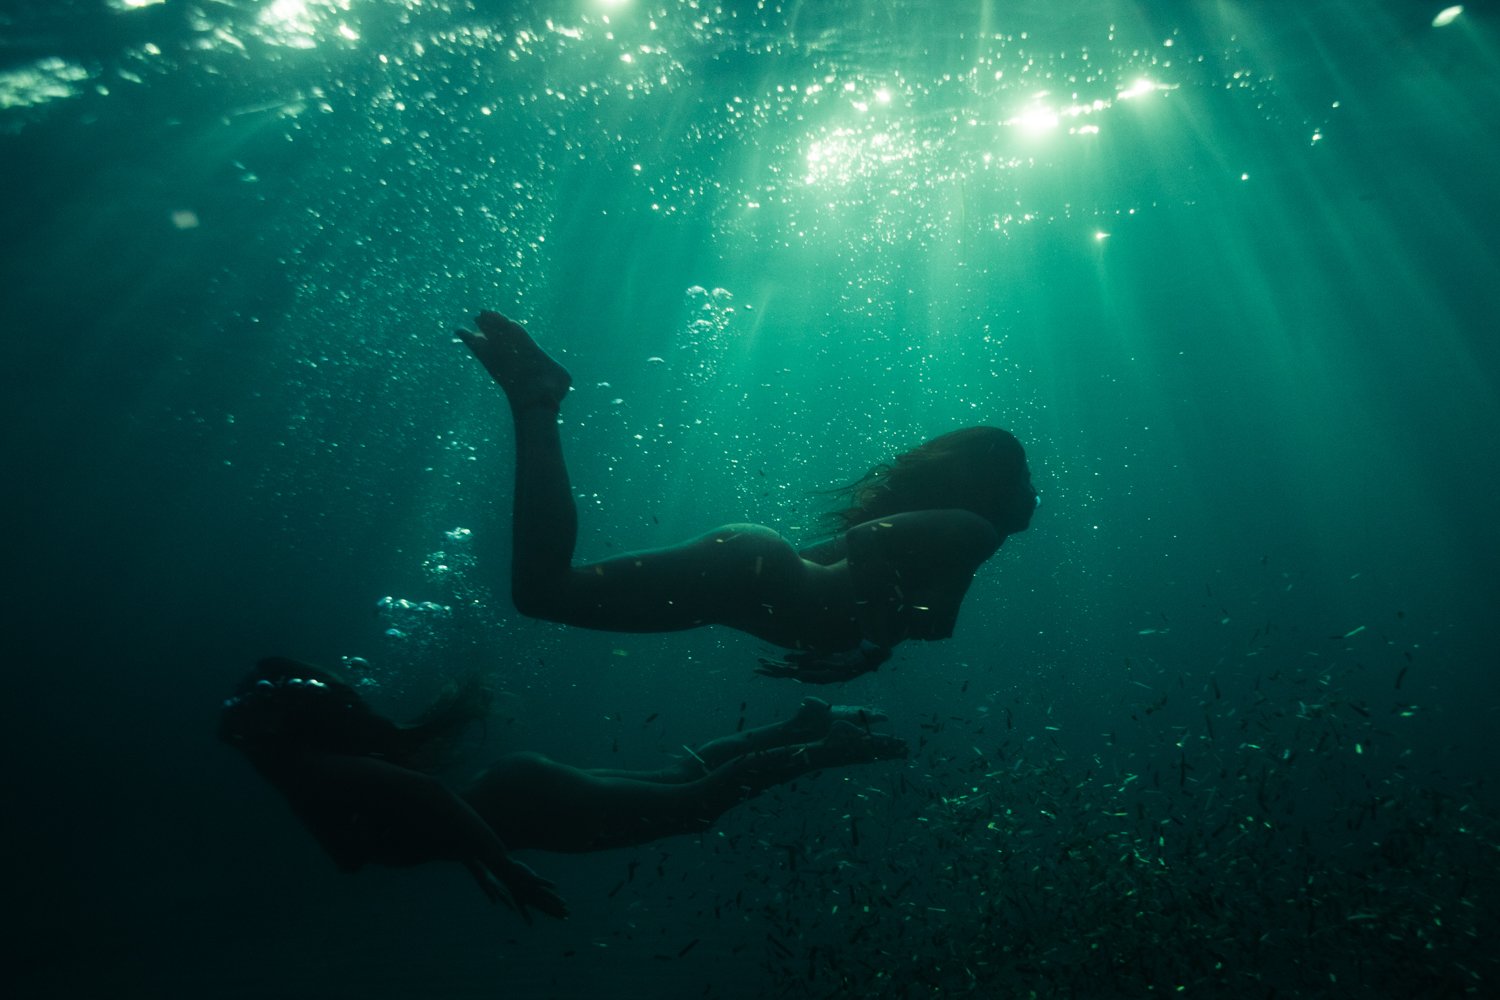 siren sirens corse corsica underwater photography photographe sous leau mermaid femme woman women nude nue fine art photography Krista Espino ajaccio sea Mediterranean france travel-20.jpg